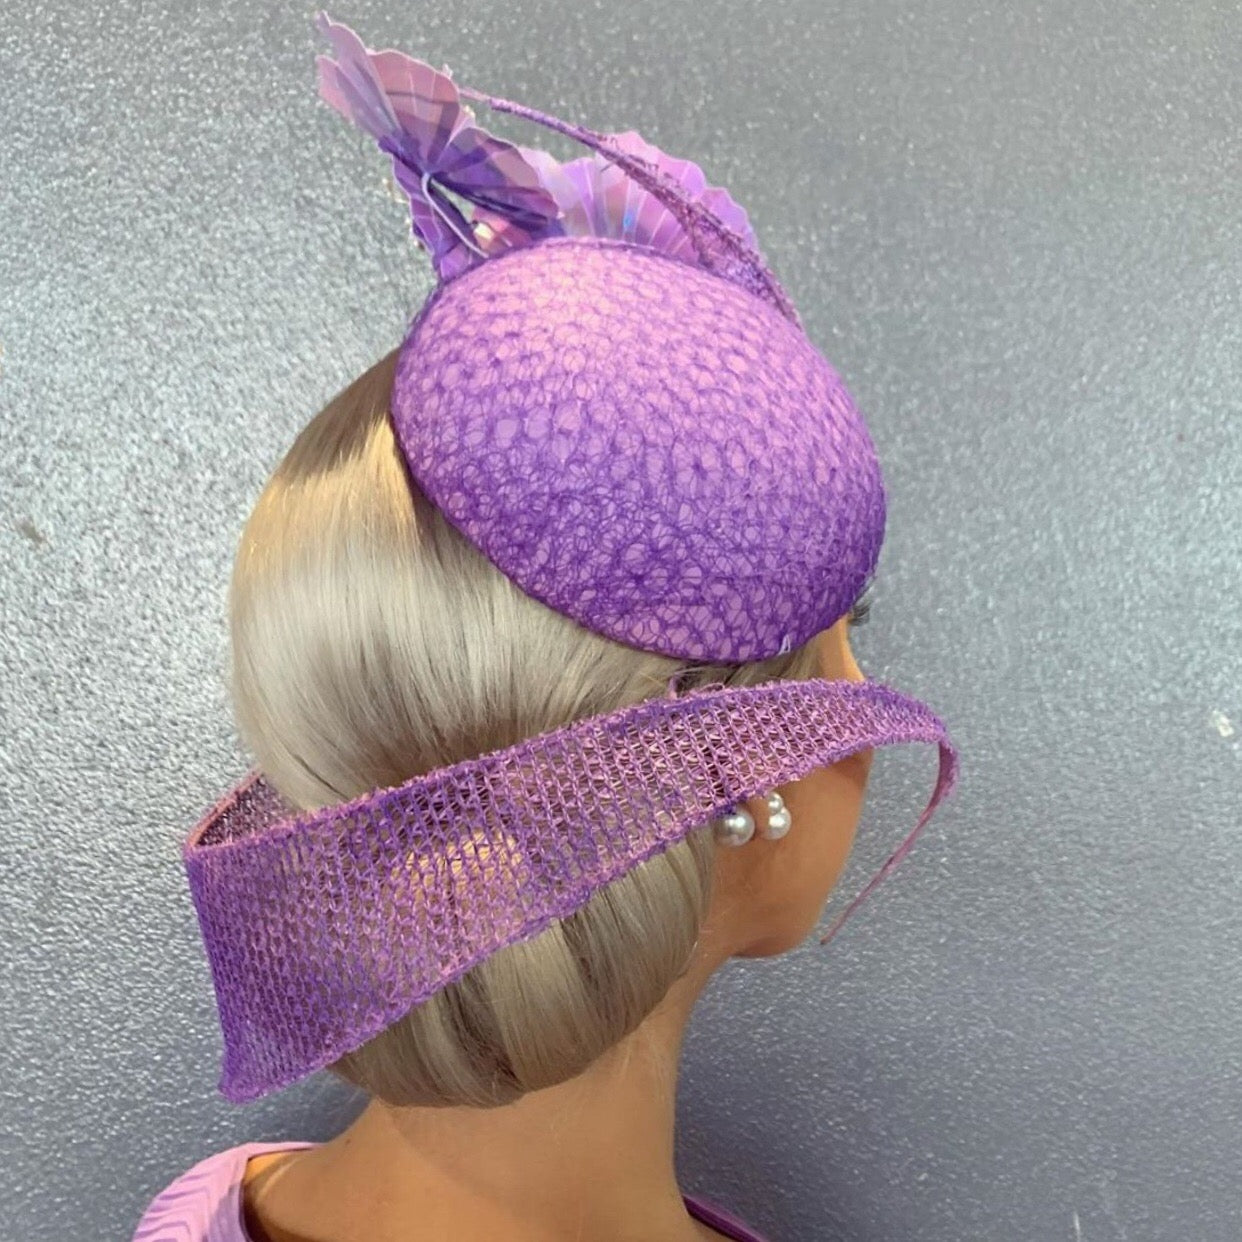 Lavender Purple swirl designer hat on a woman with blonde hair